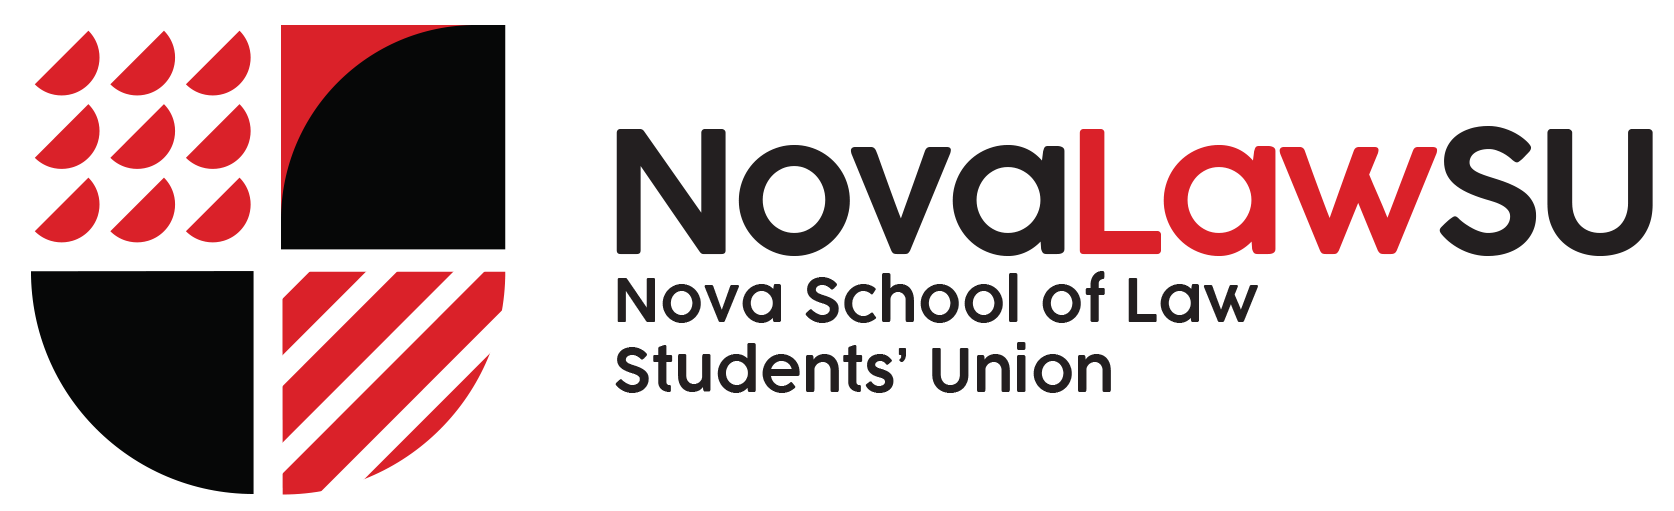 Nova Law SU - NOVA School of Law Students Union